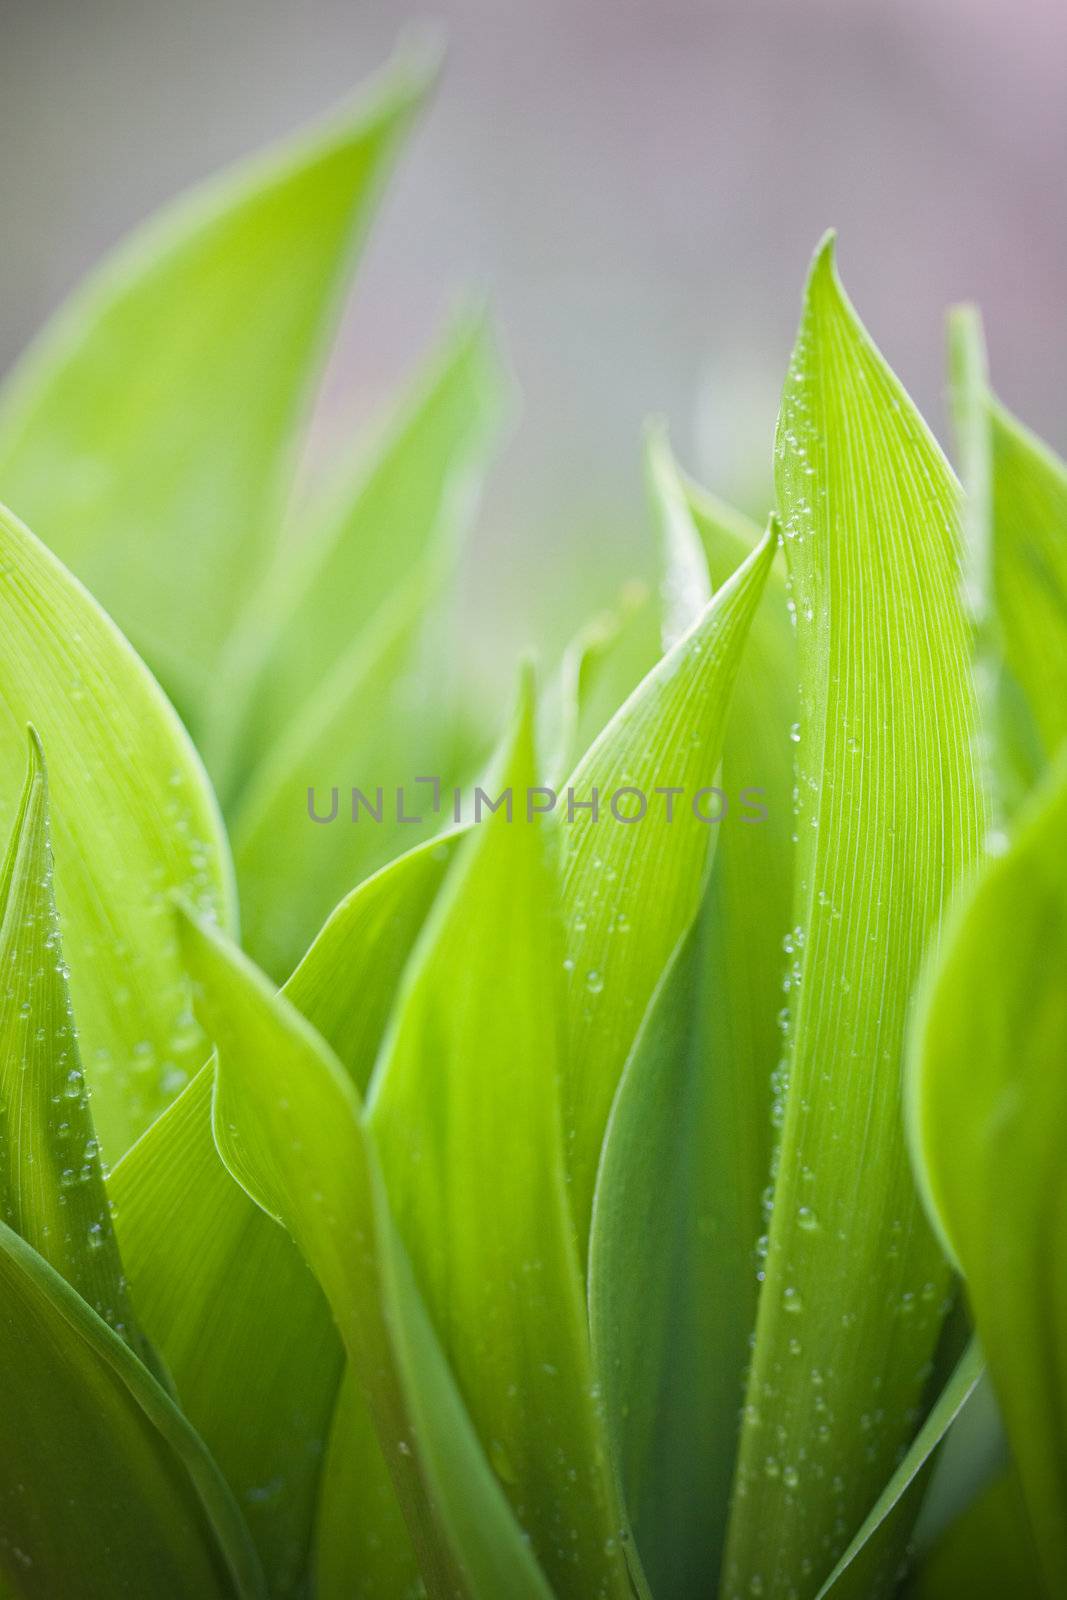 Focus on fresh green leafs of lilies, rain drops